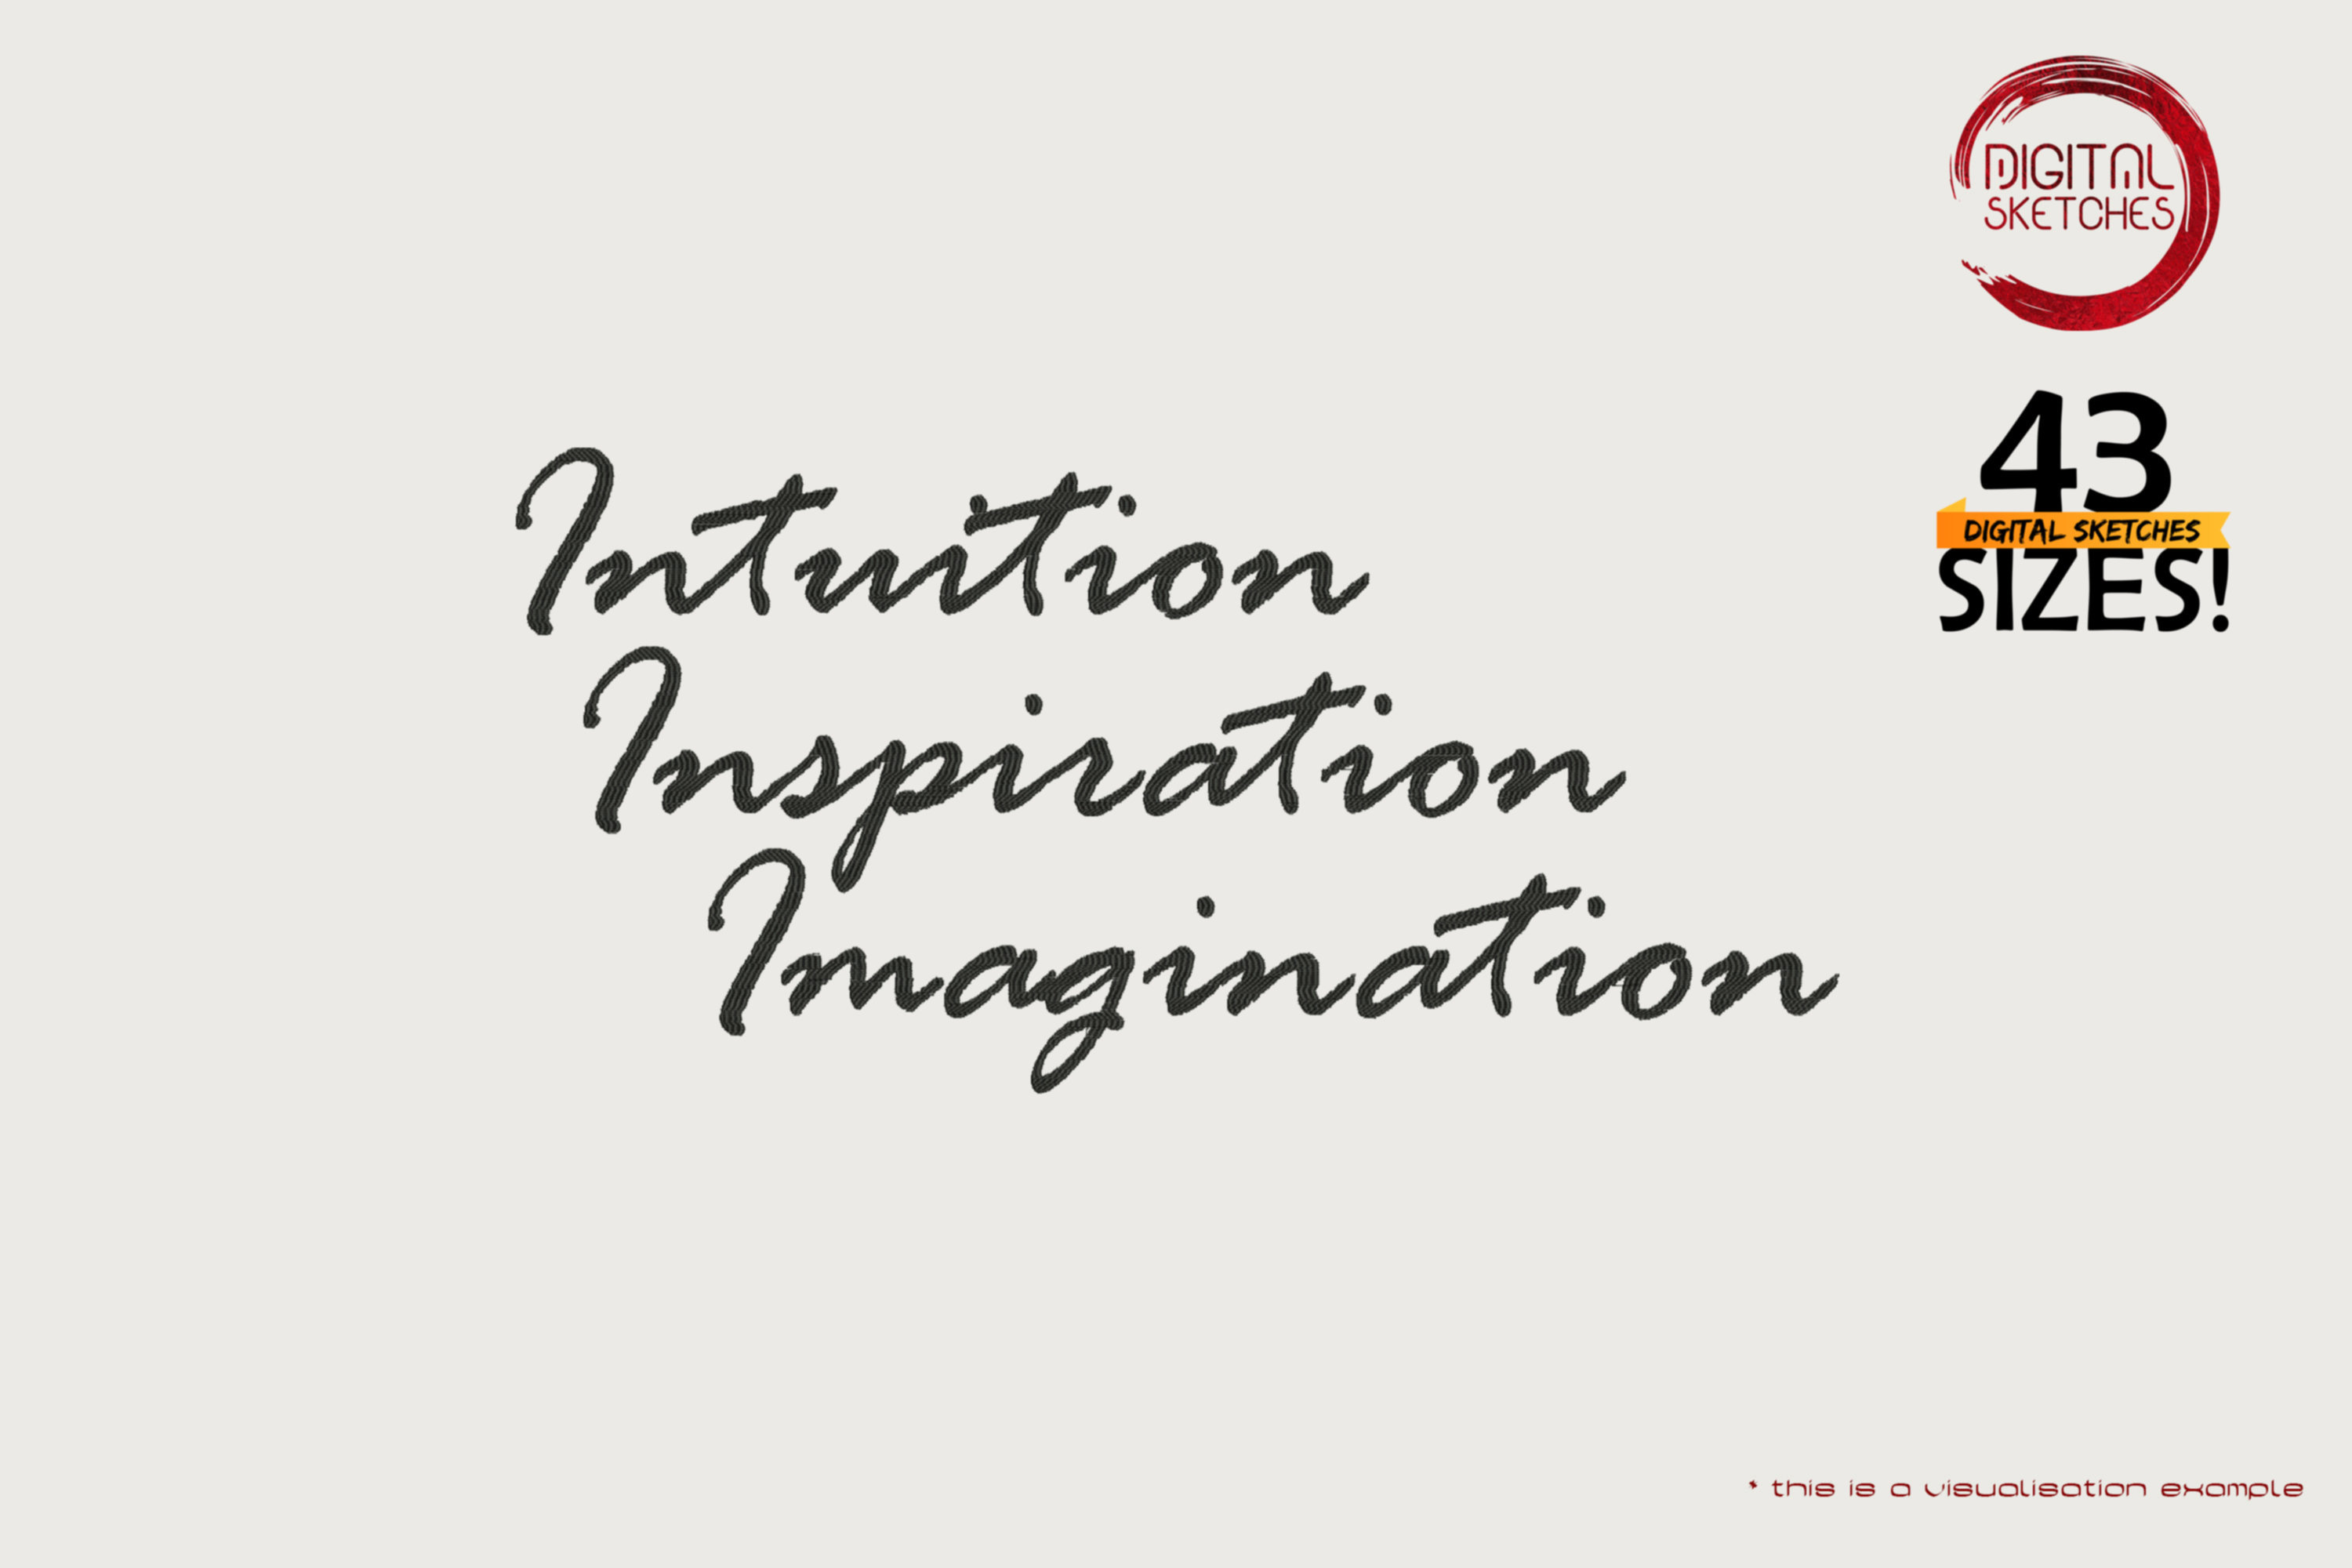 Intuition Inspiration Imagination